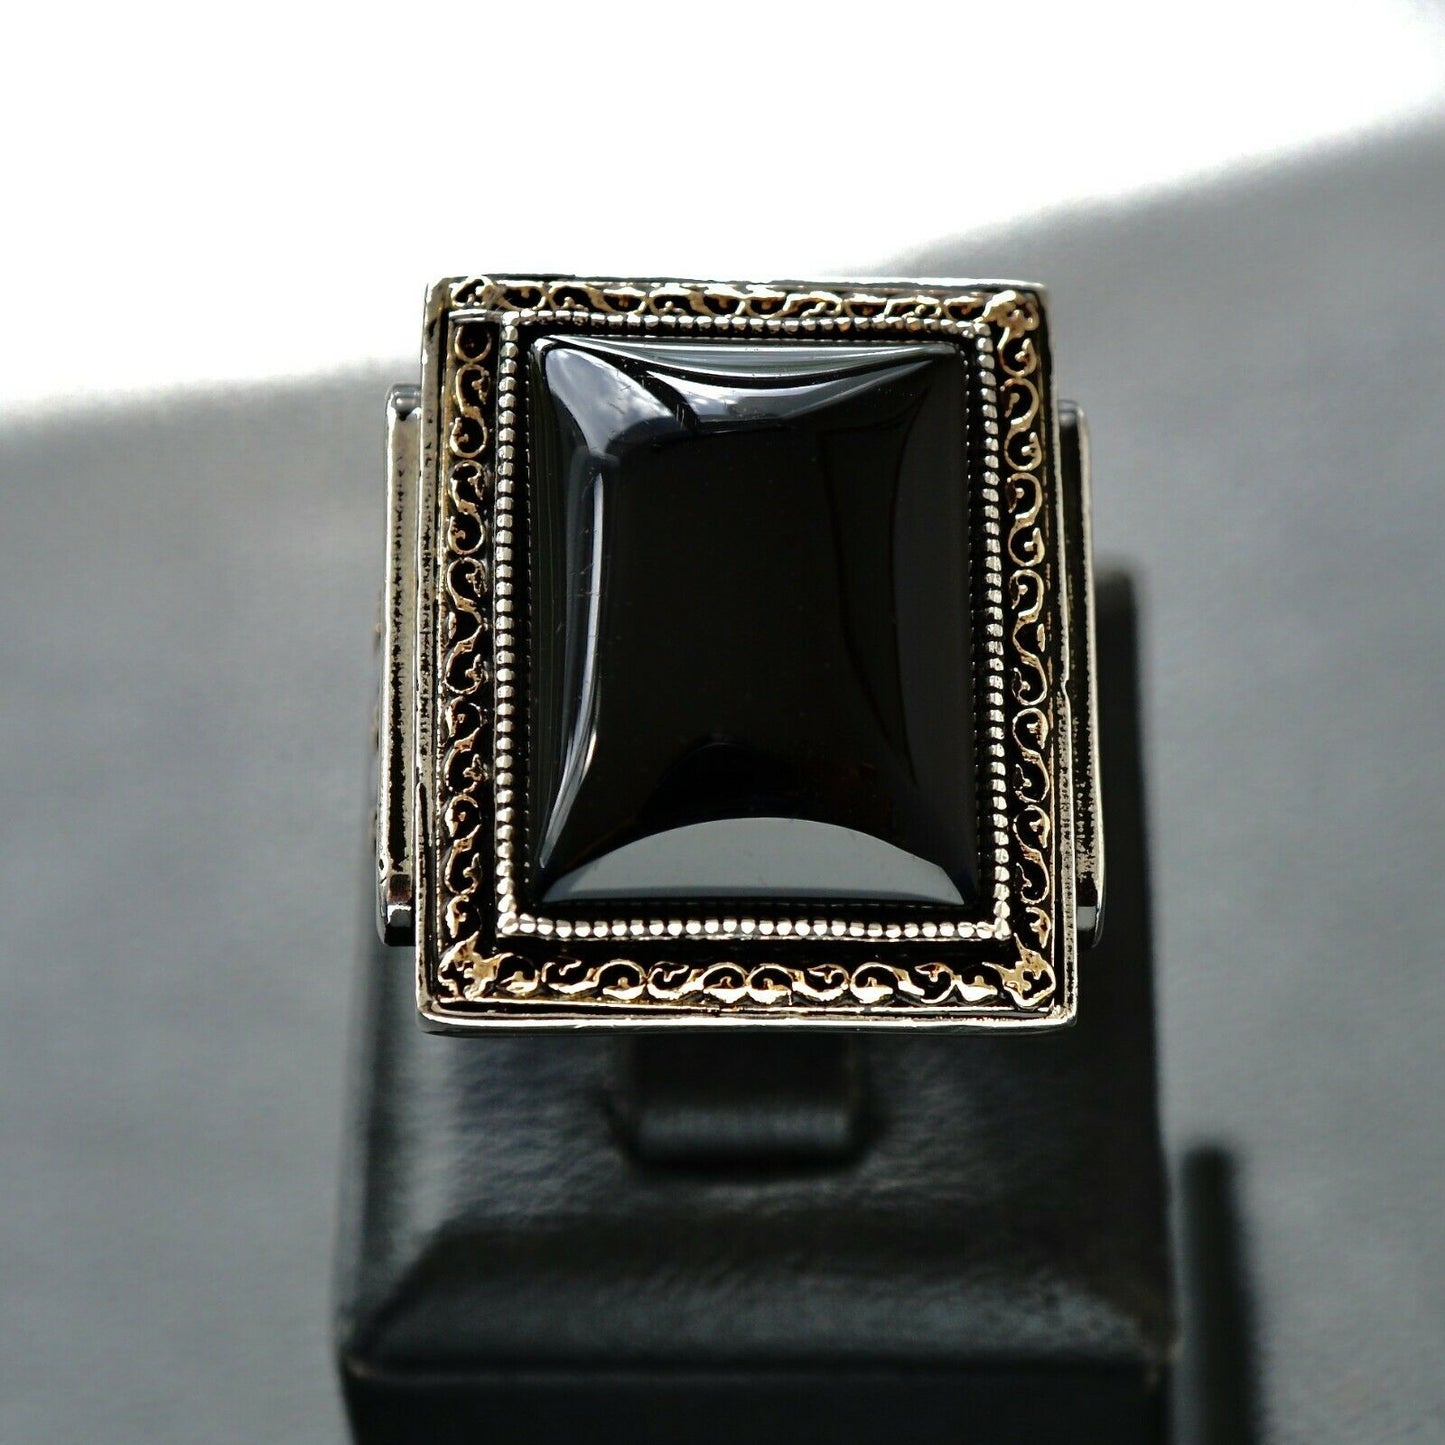 Sterling Silver Mens Ring Black Onyx 925 Solid Elegant Artisan Handmade Jewelry